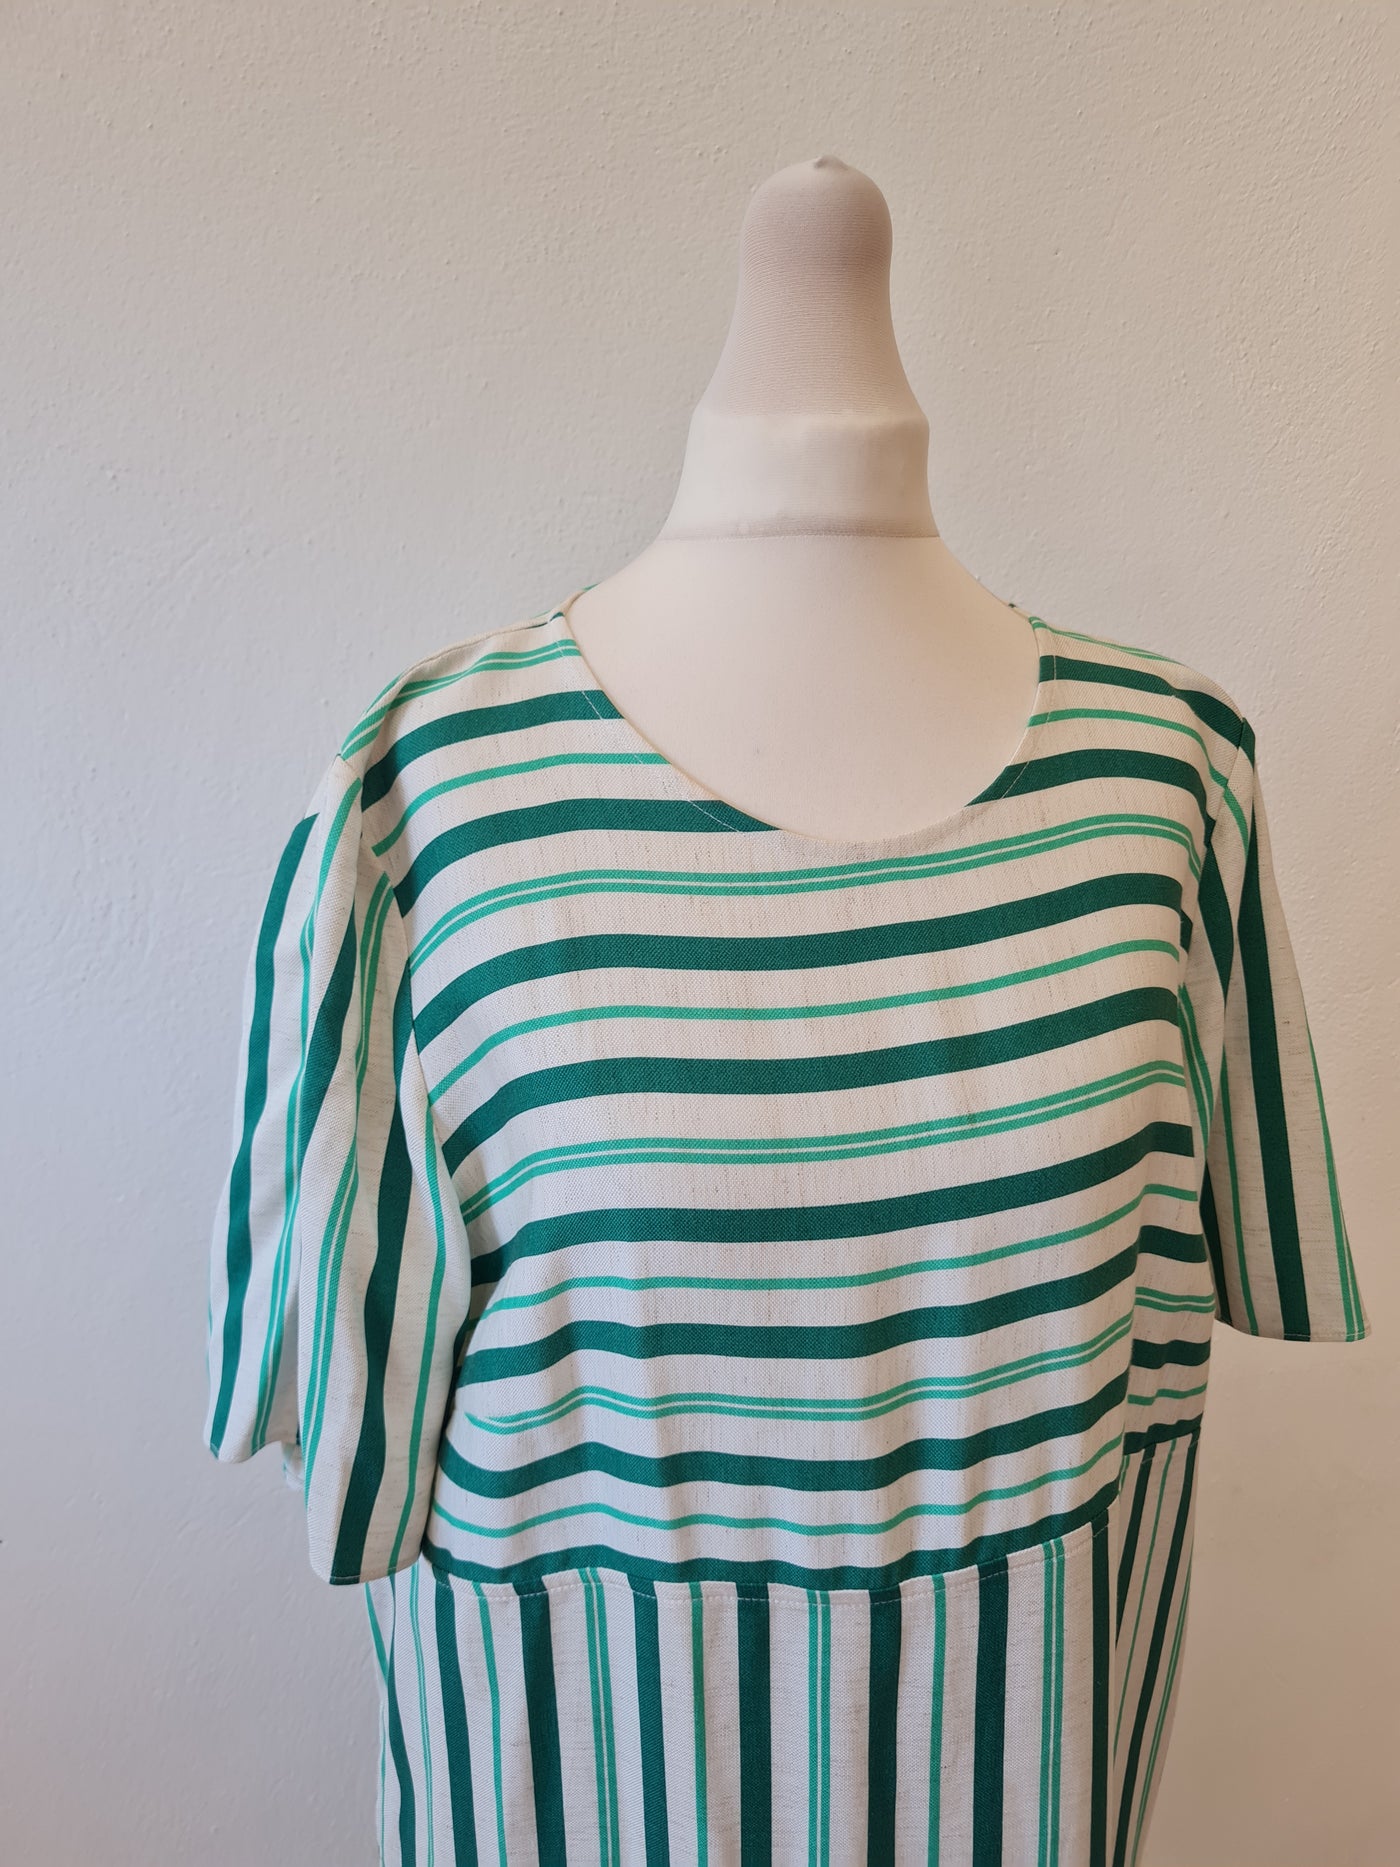 Oliver Bonas Green stripe dress Size 14